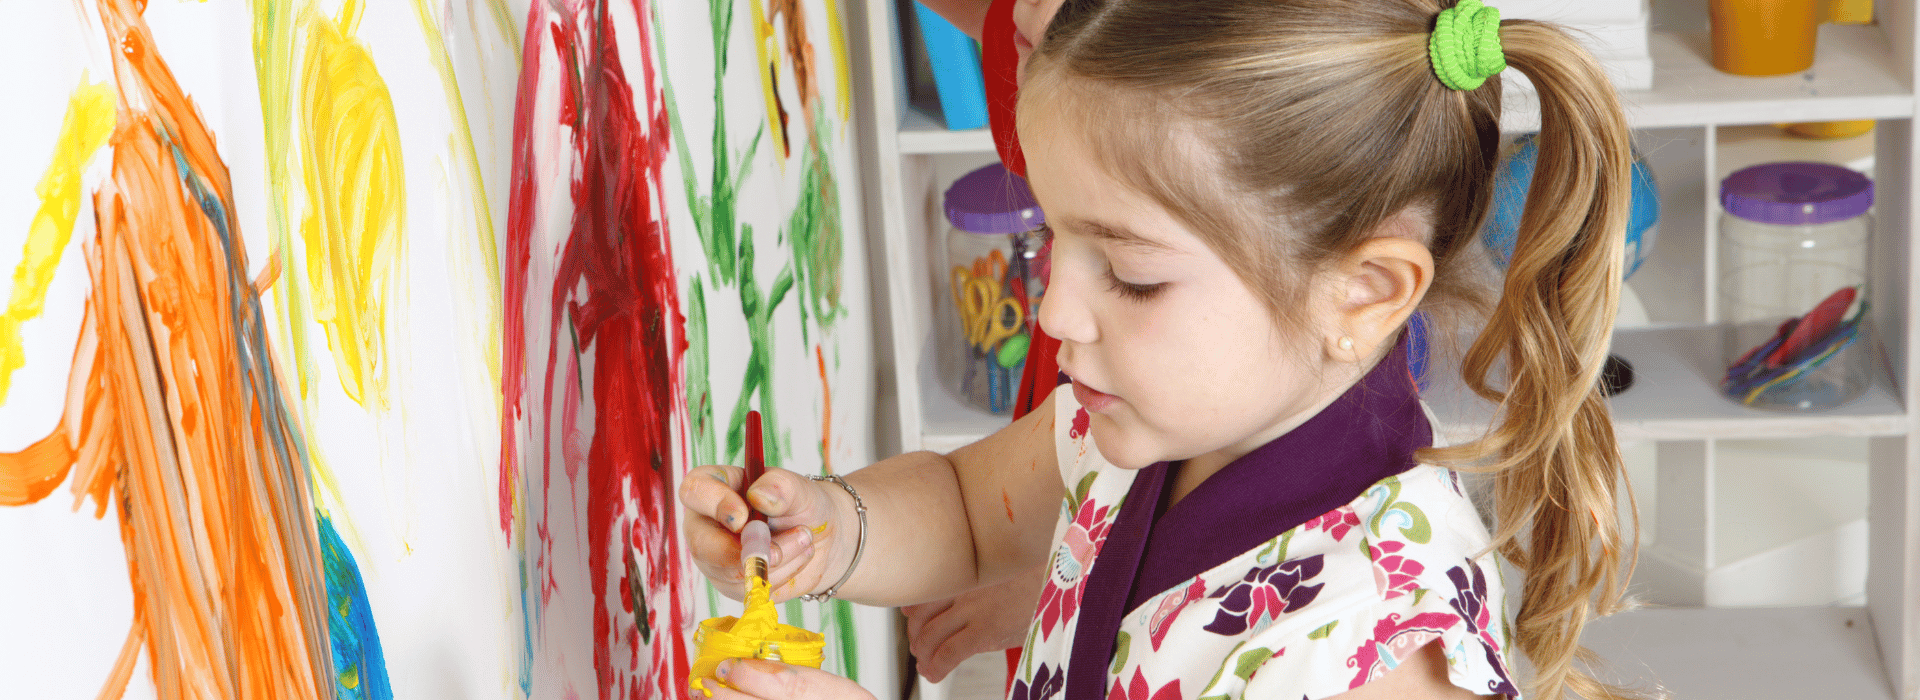 Little girl painting at easel | Am I Creative | Shine Body & Bath Chakra Soap | Blog